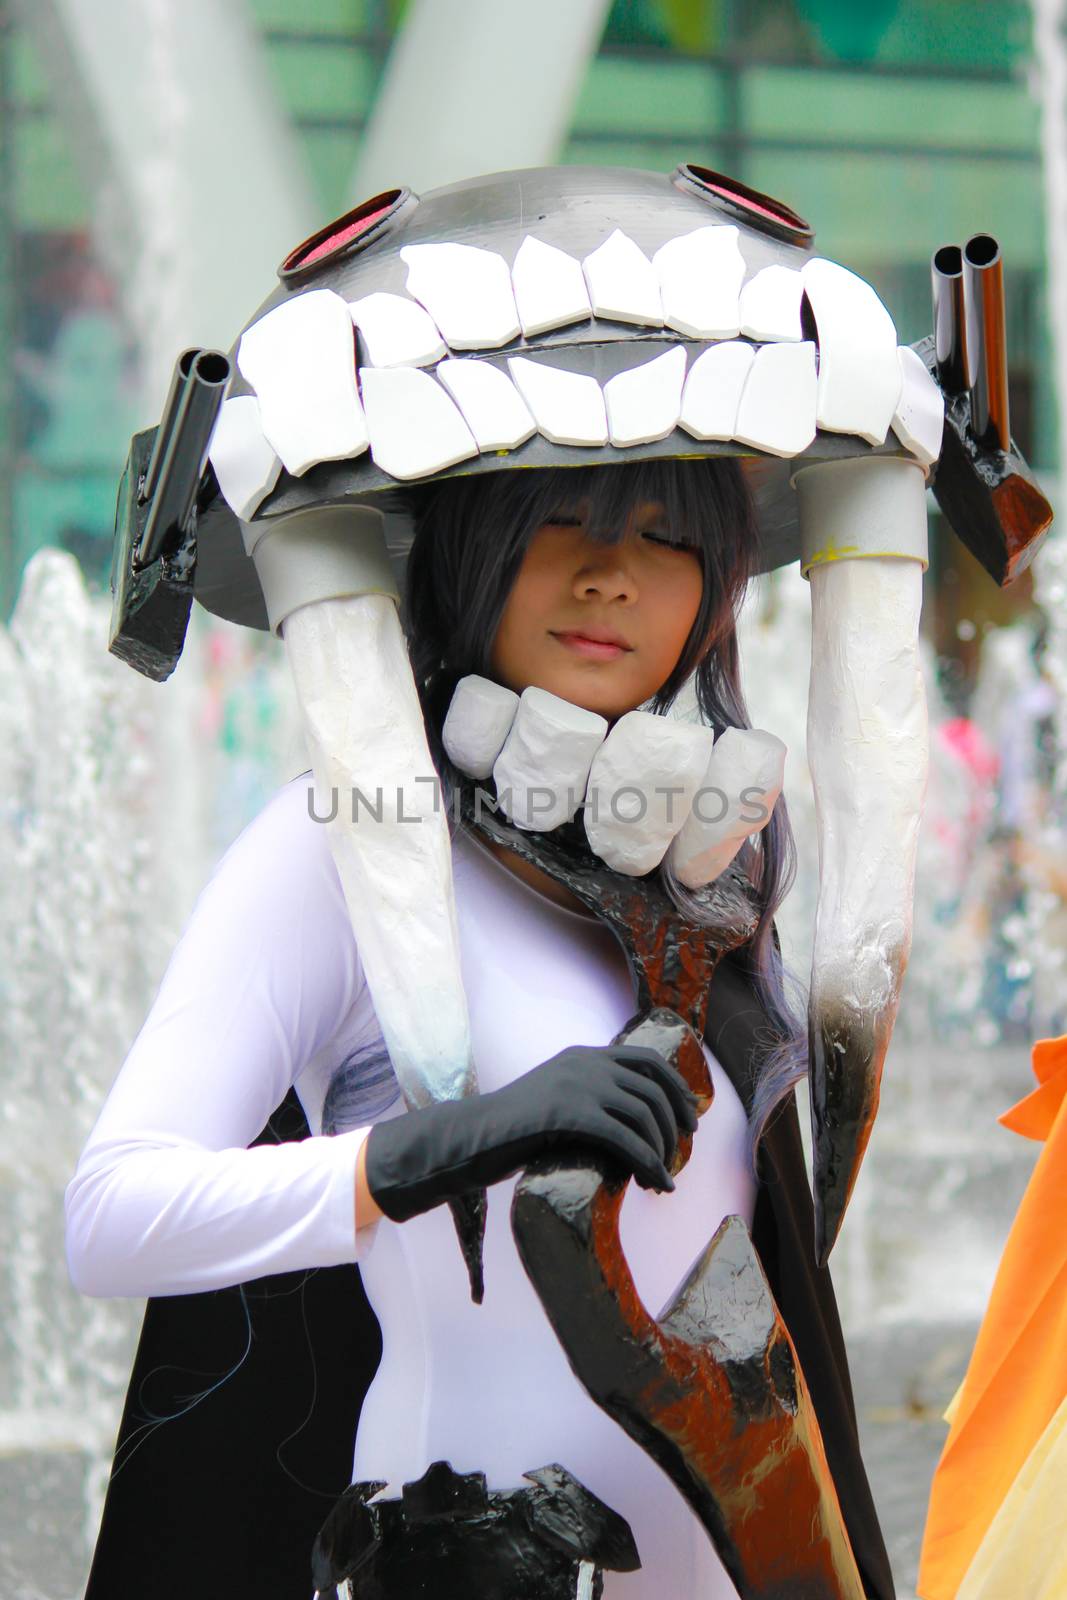 Bangkok - Aug 31: An unidentified Japanese anime cosplay Kubo Wo Kyu pose  on August 31, 2014 at Central World, Bangkok, Thailand.